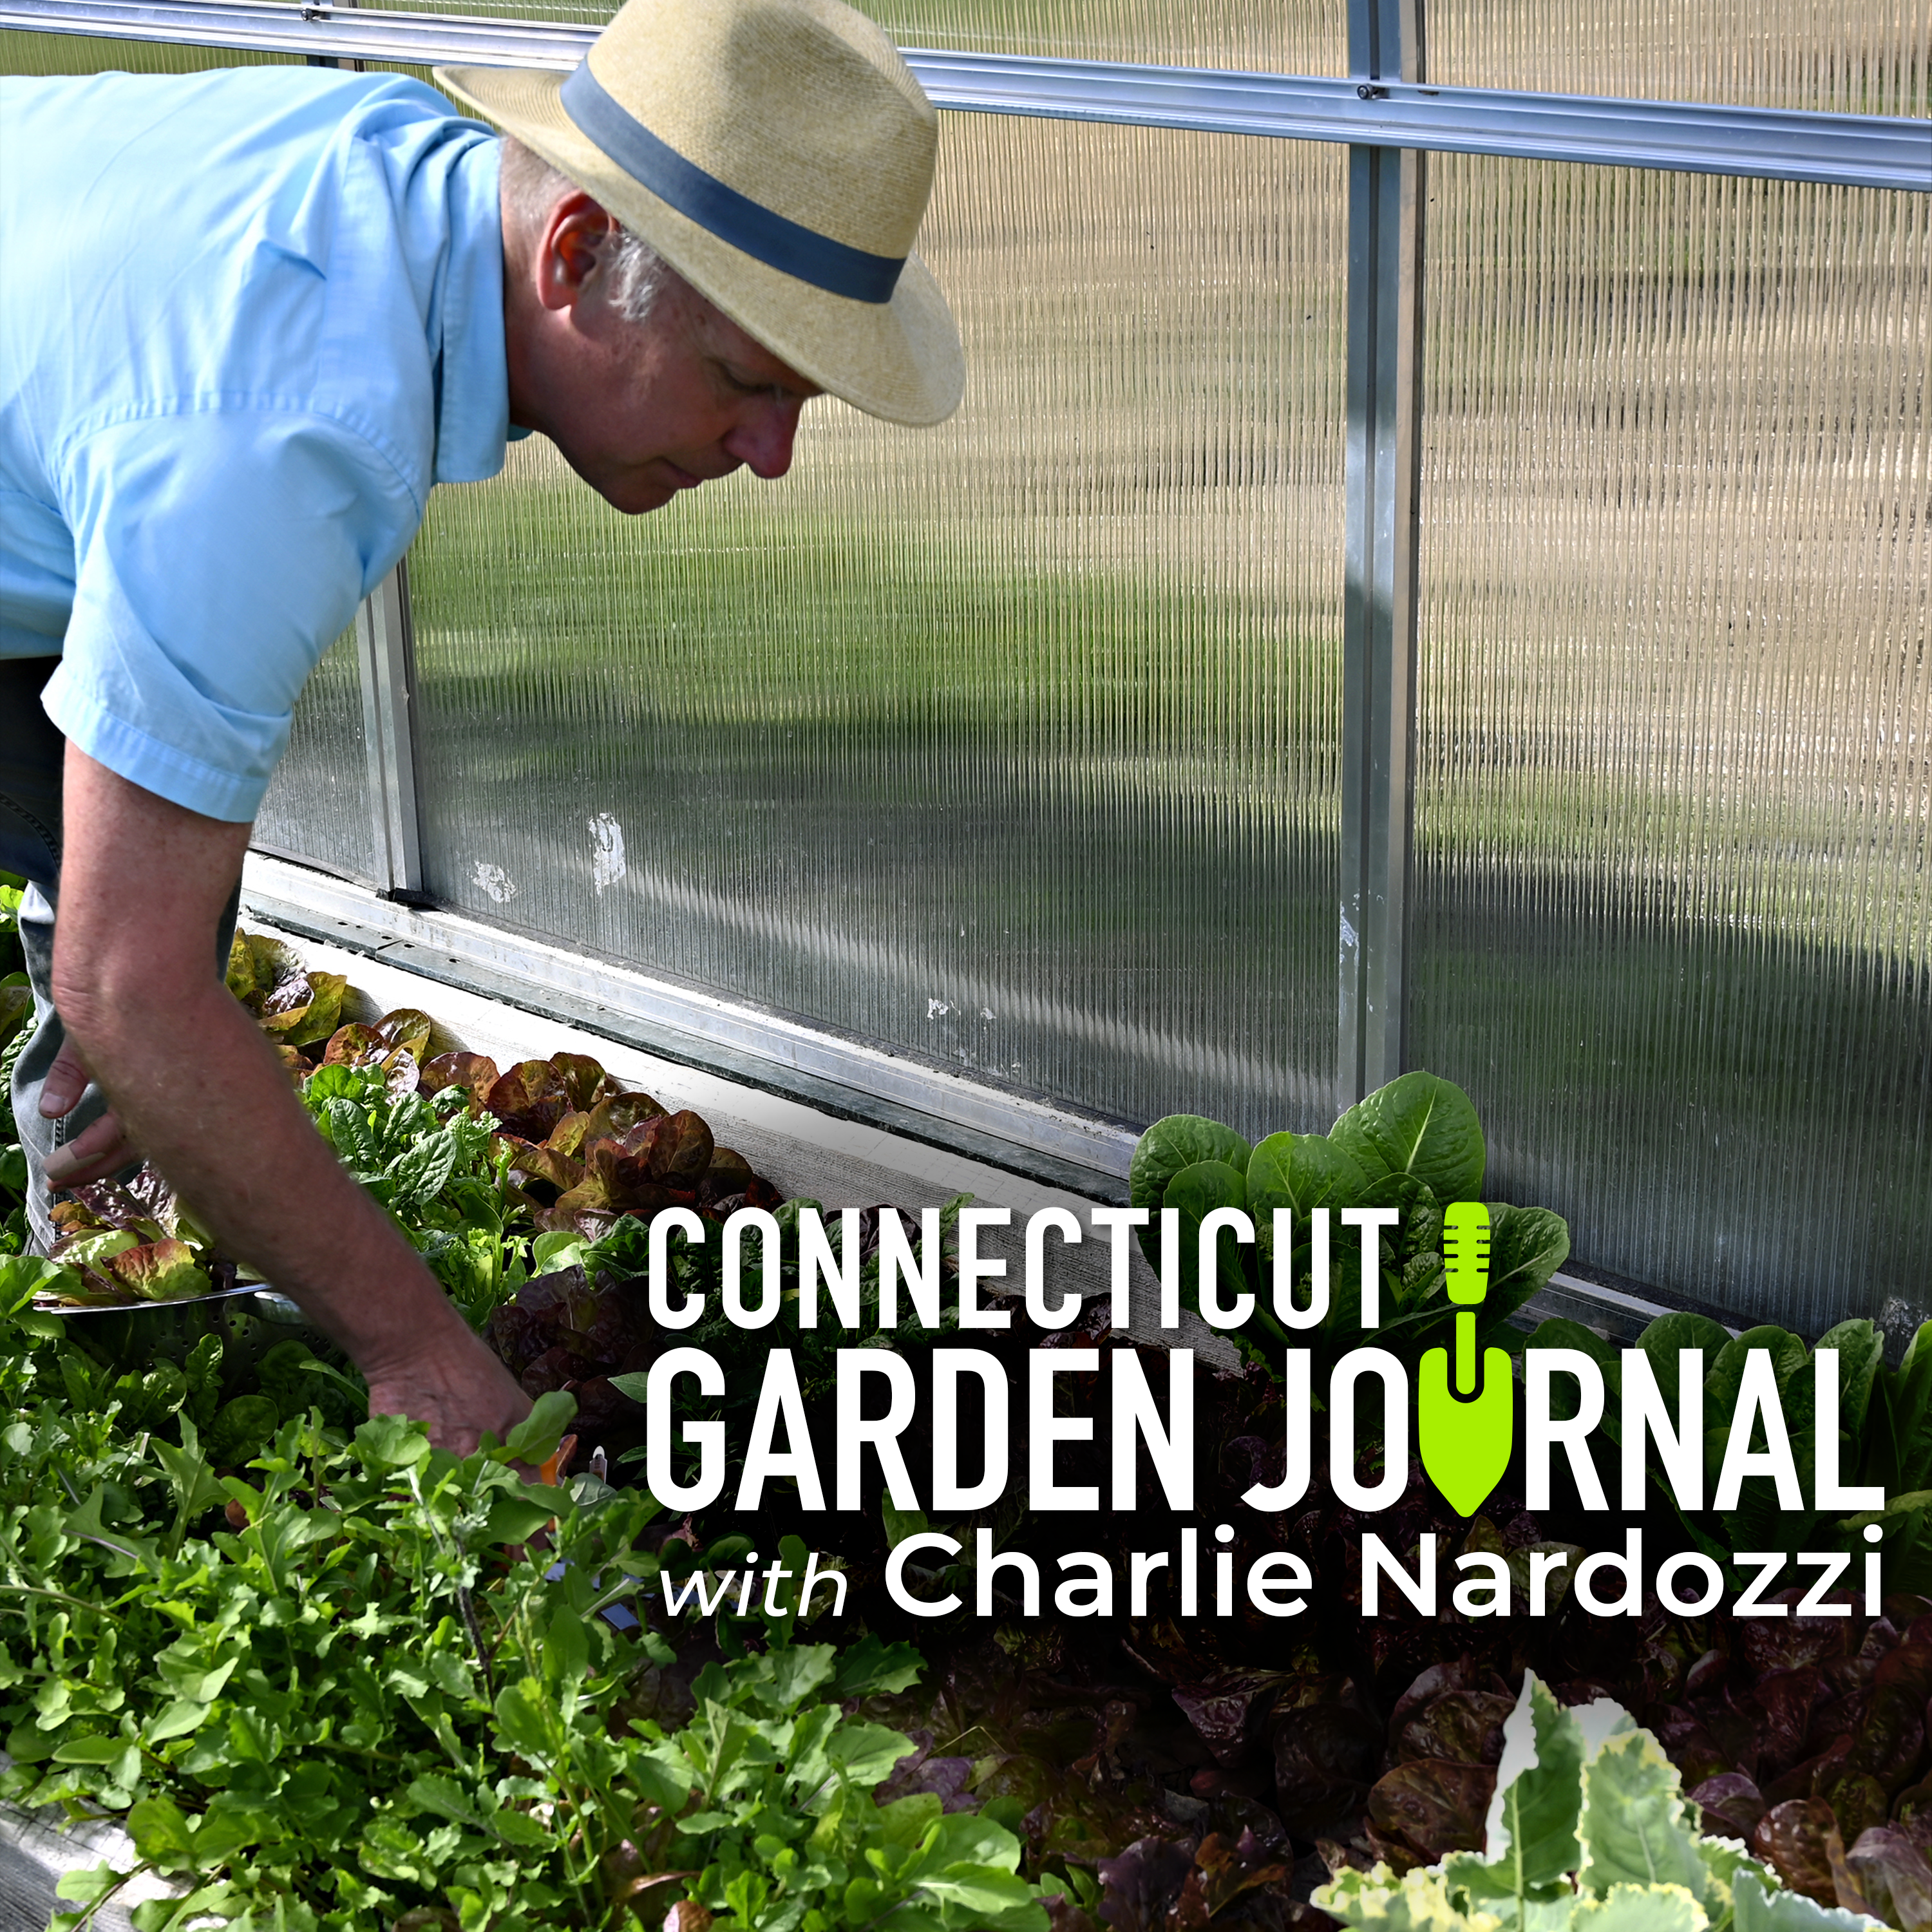 Connecticut Garden Journal: Grow ground covers for pollinators